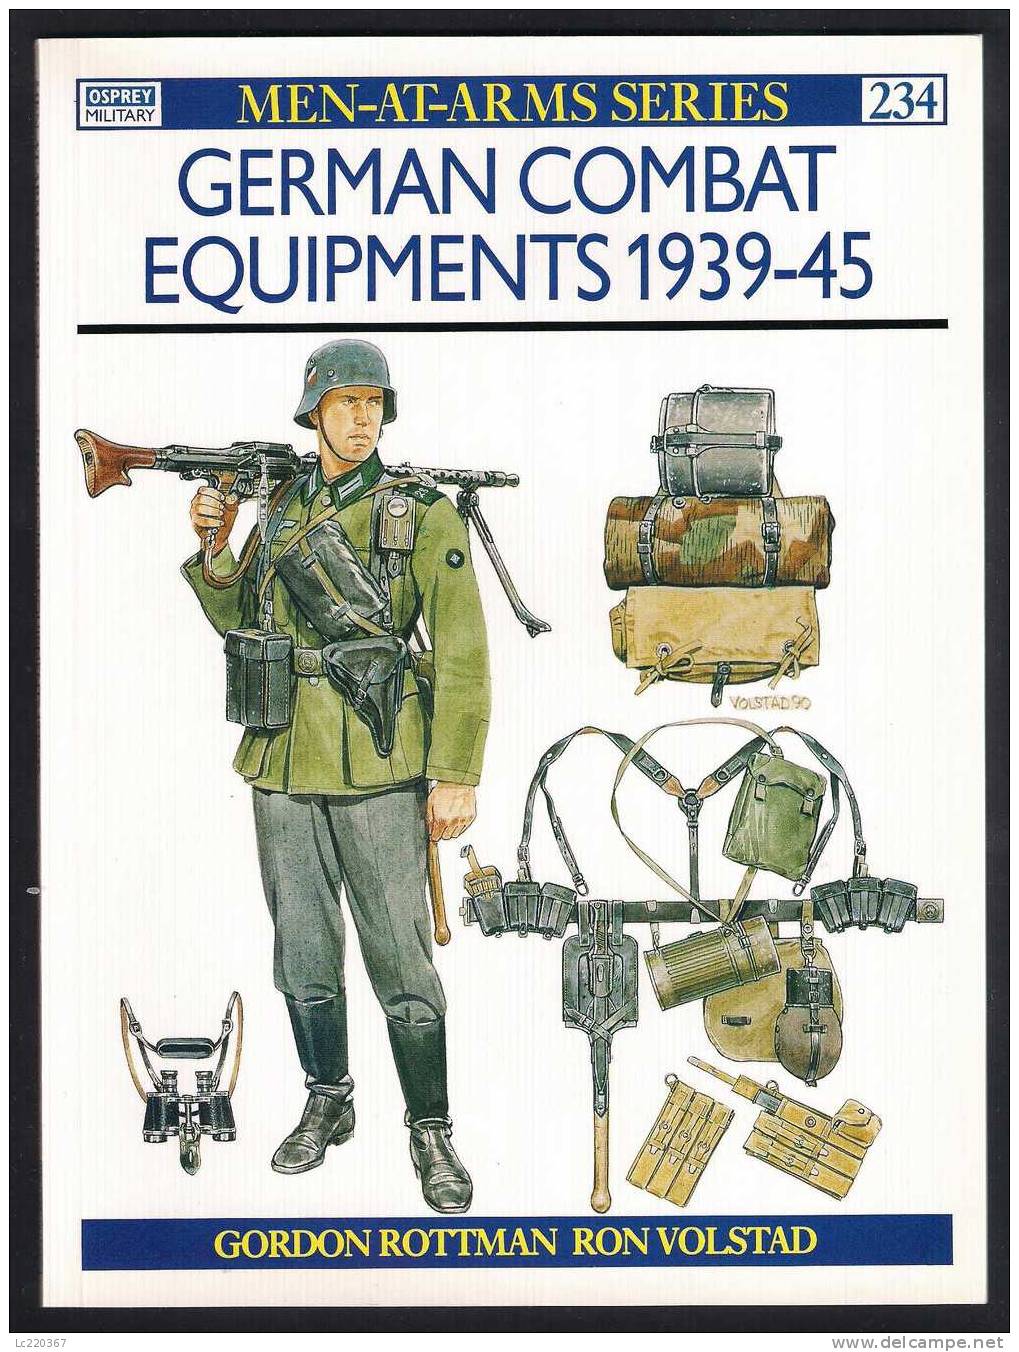 OSPREY MILITARY MEN-AT-ARMS SERIES NR.234 GERMAN COMBAT EQUIPMENTS 1939-45 GORDON ROTTMAN ISBN 0-85045-952-4 - Inglés